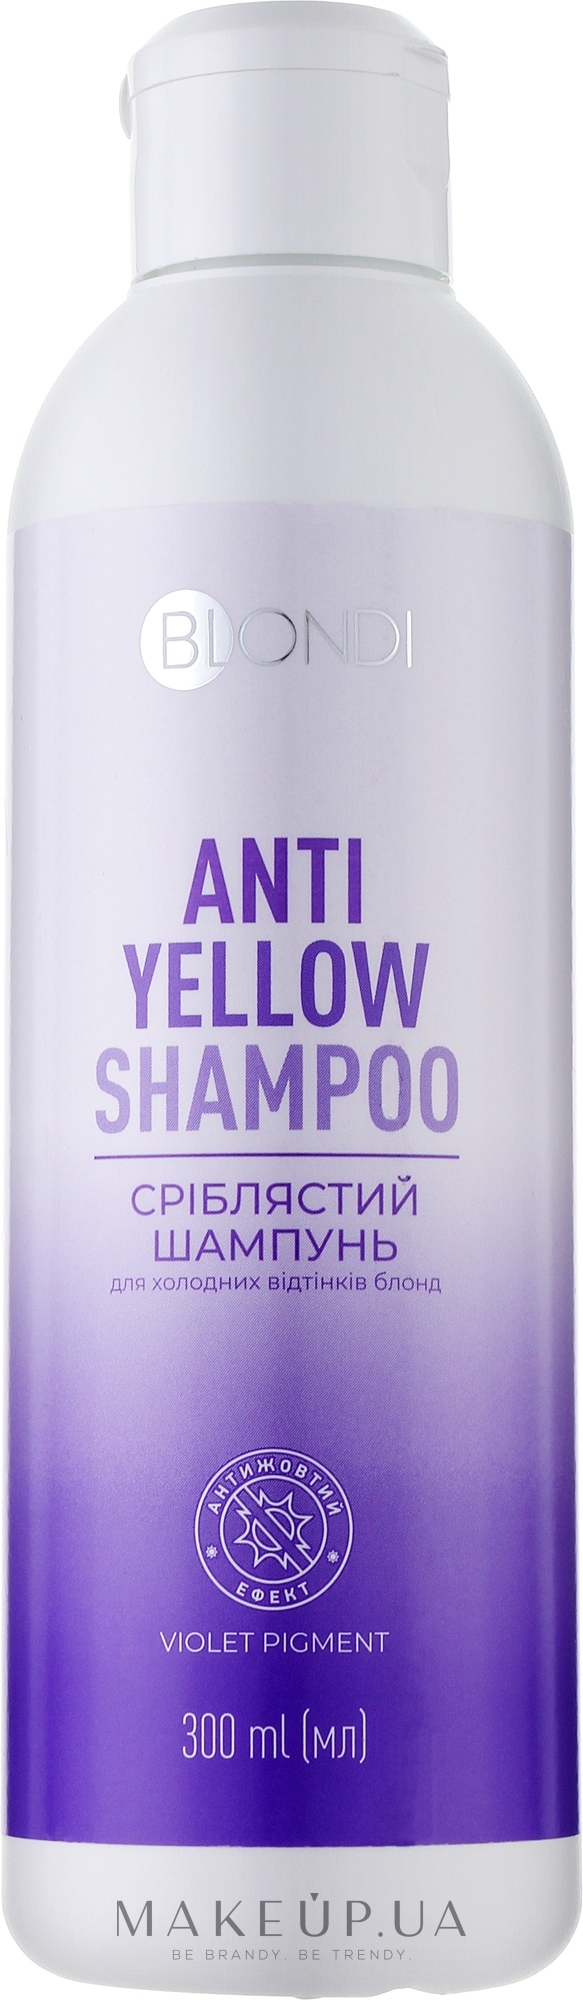 Серебристый шампунь для холодных оттенков блонд - Unic Blondi Antiyellow Shampoo — фото 300ml